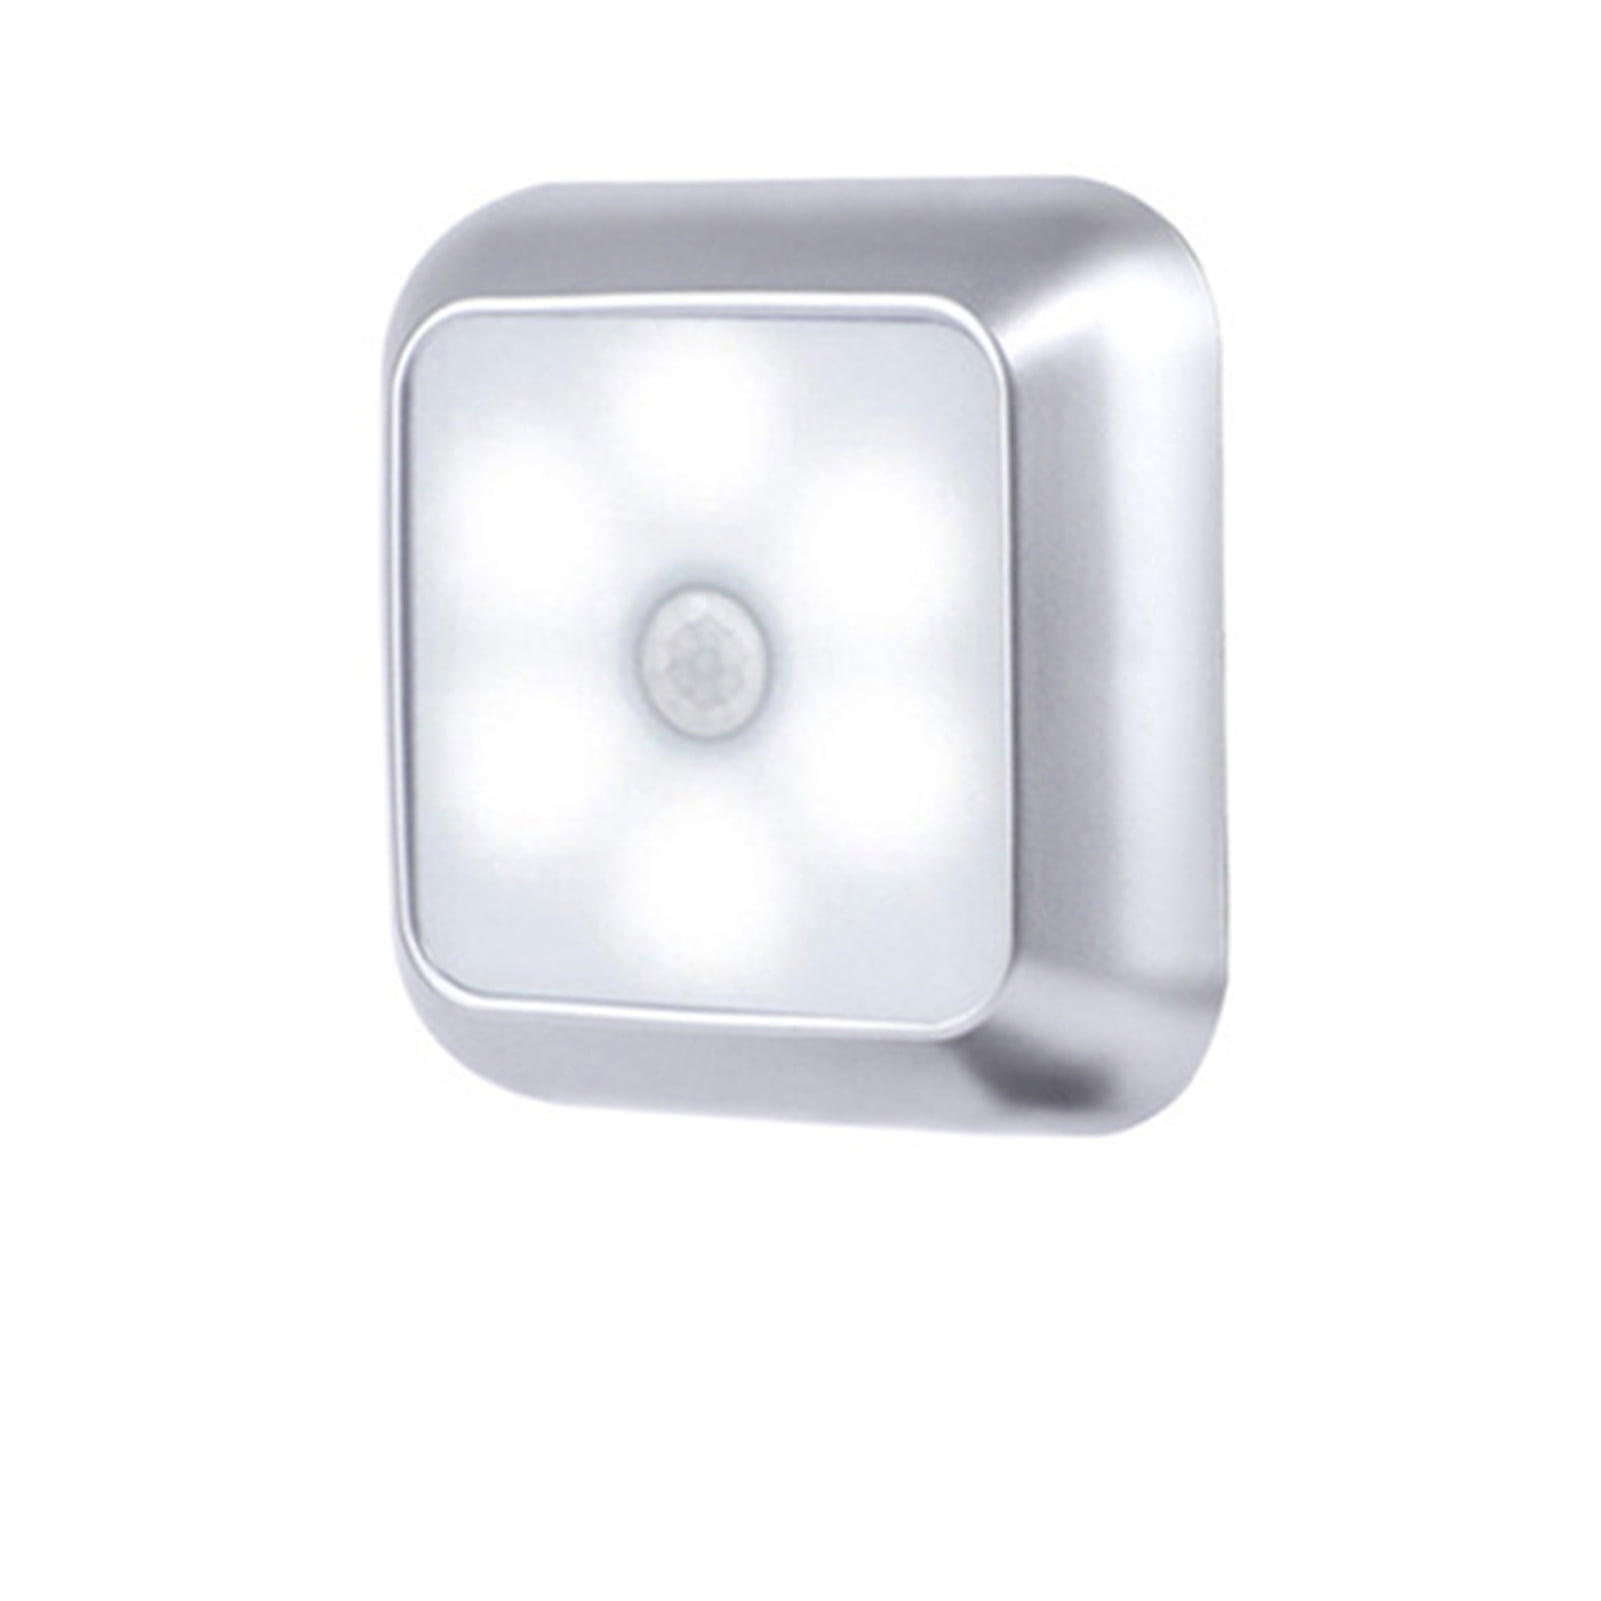 Details about   6 LED Night Light Motion Sensor Wall Closet Cabinet Stair Wireless Lamp UK. 